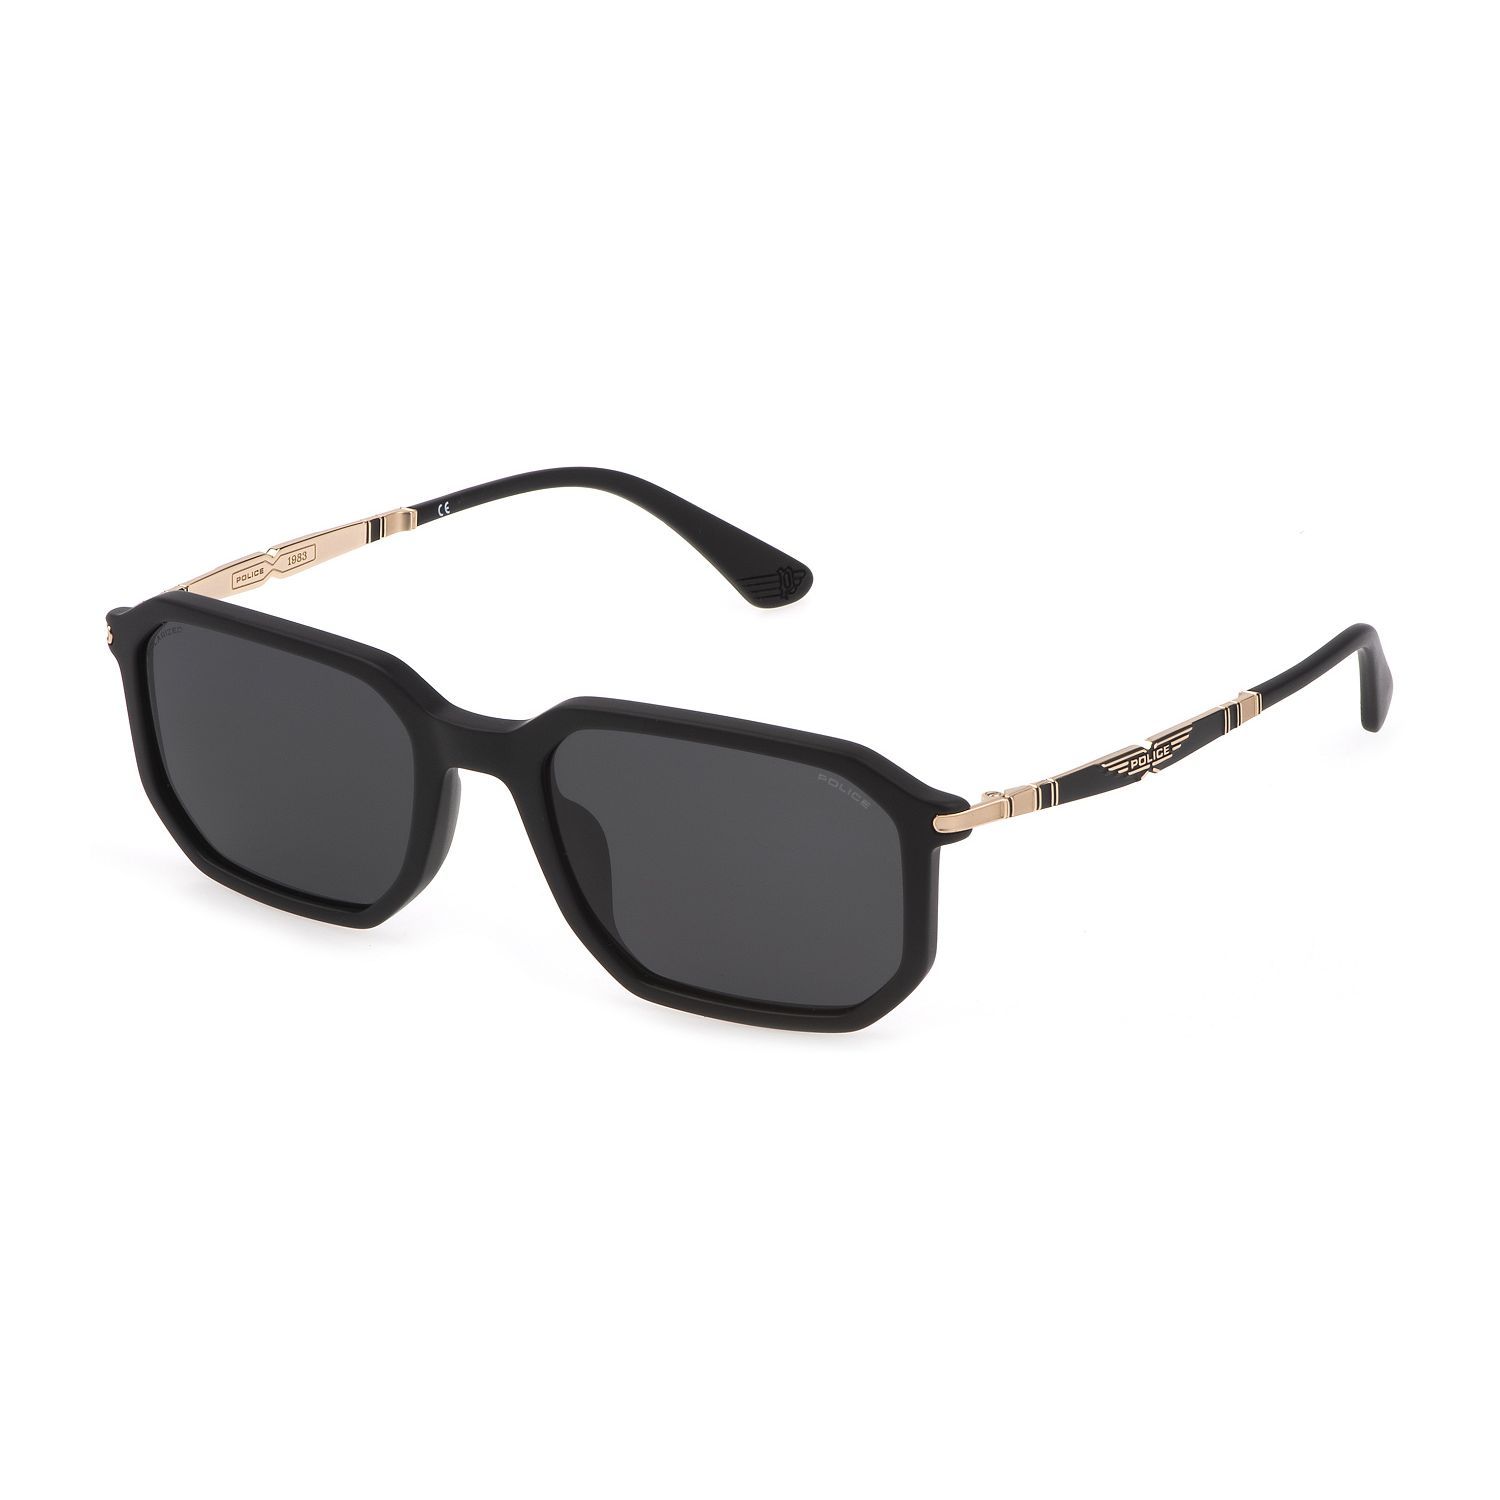 SPLF67M Rectangle Sunglasses 703P - size 55